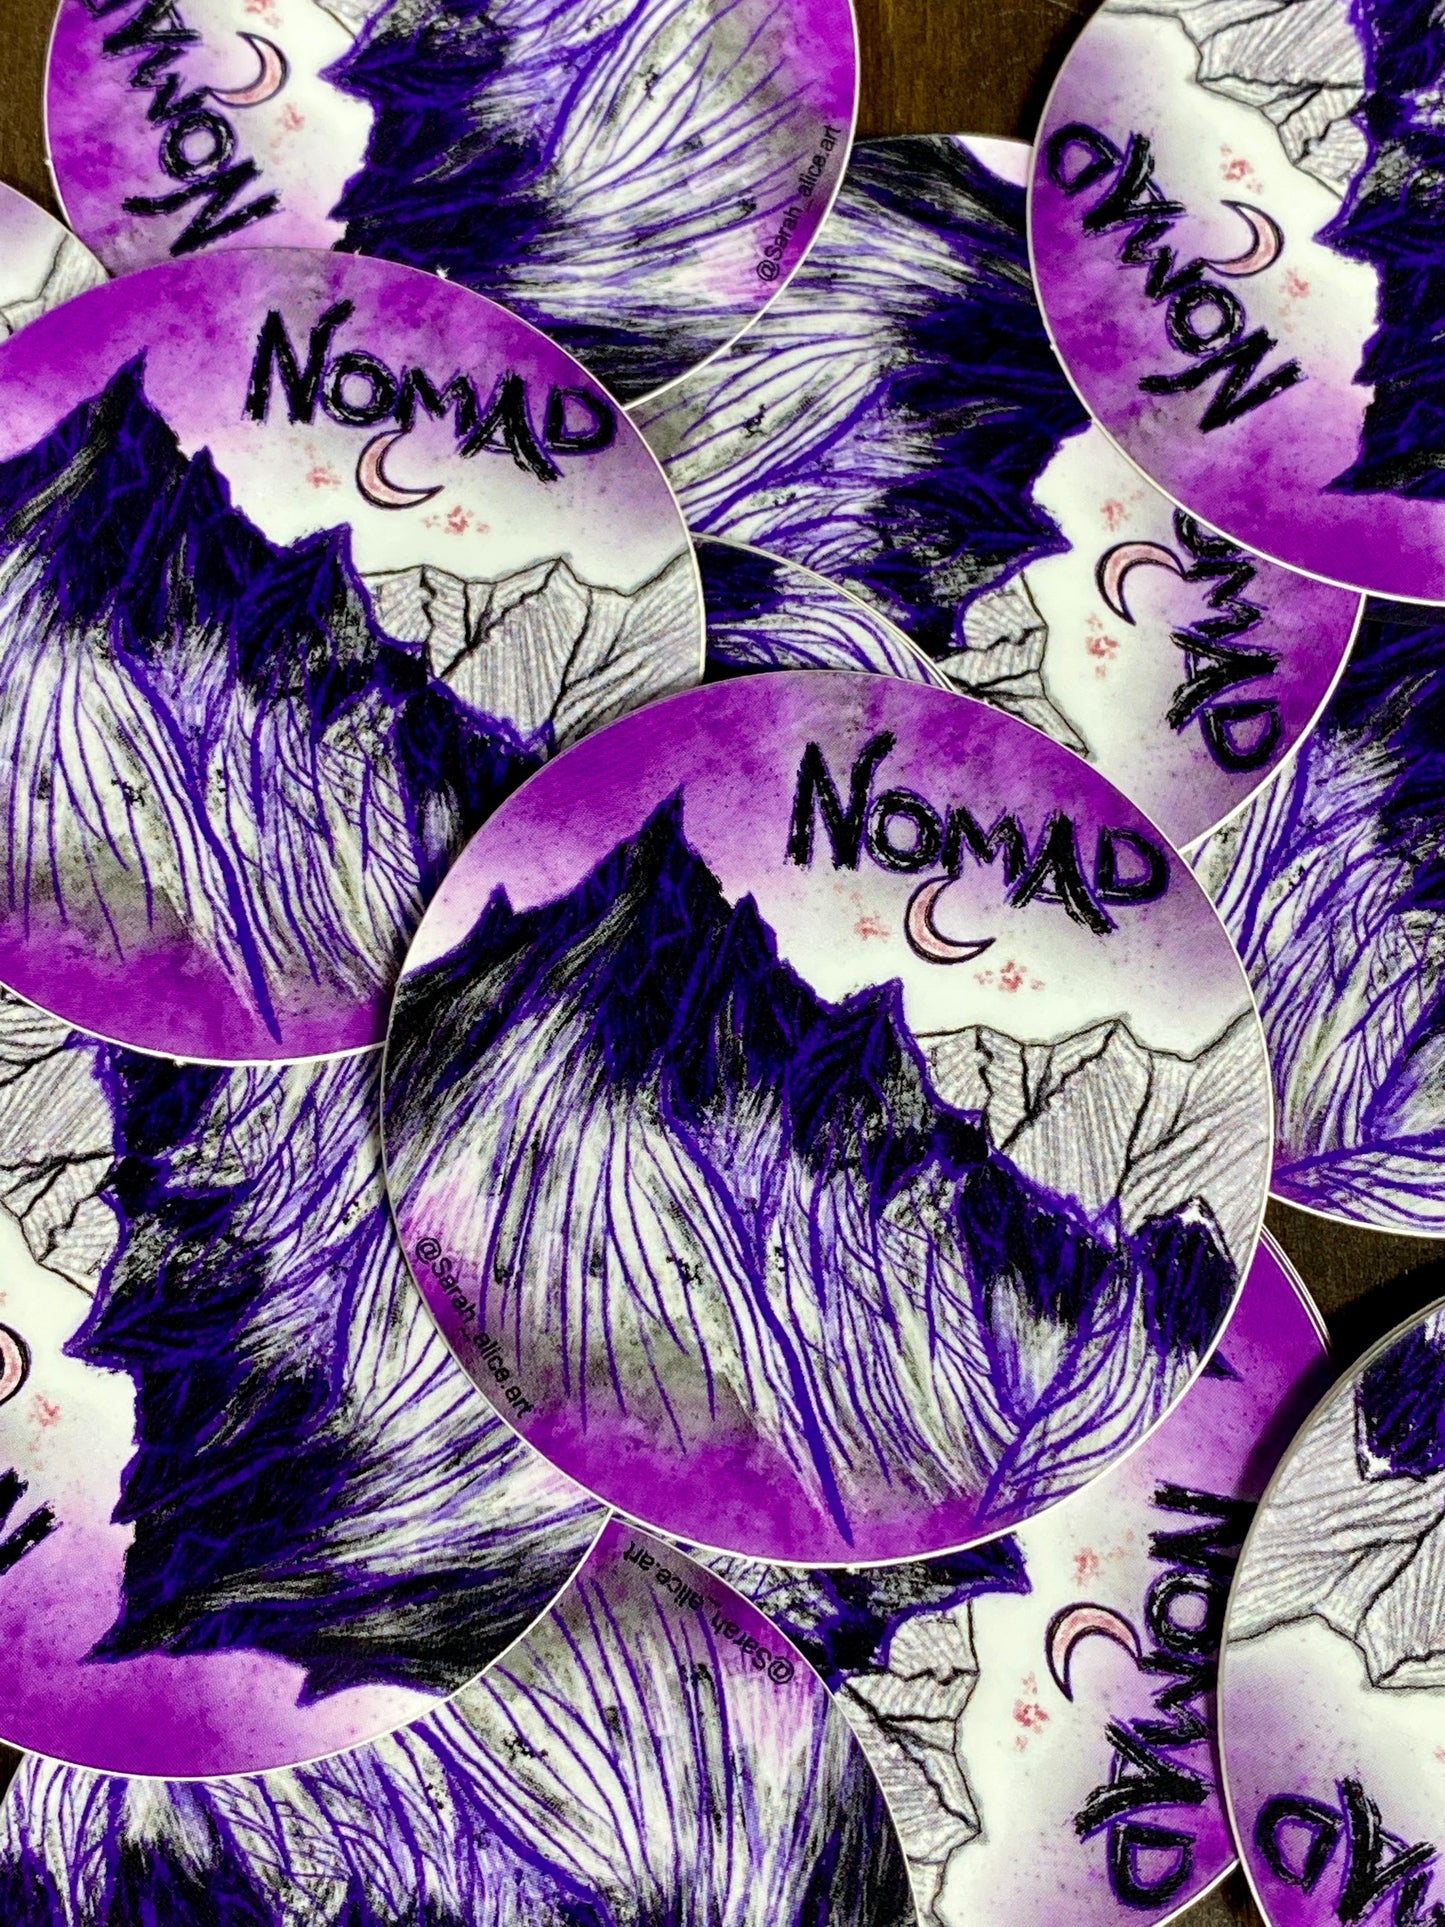 Small Vinyl Purple " Nomad " Sticker